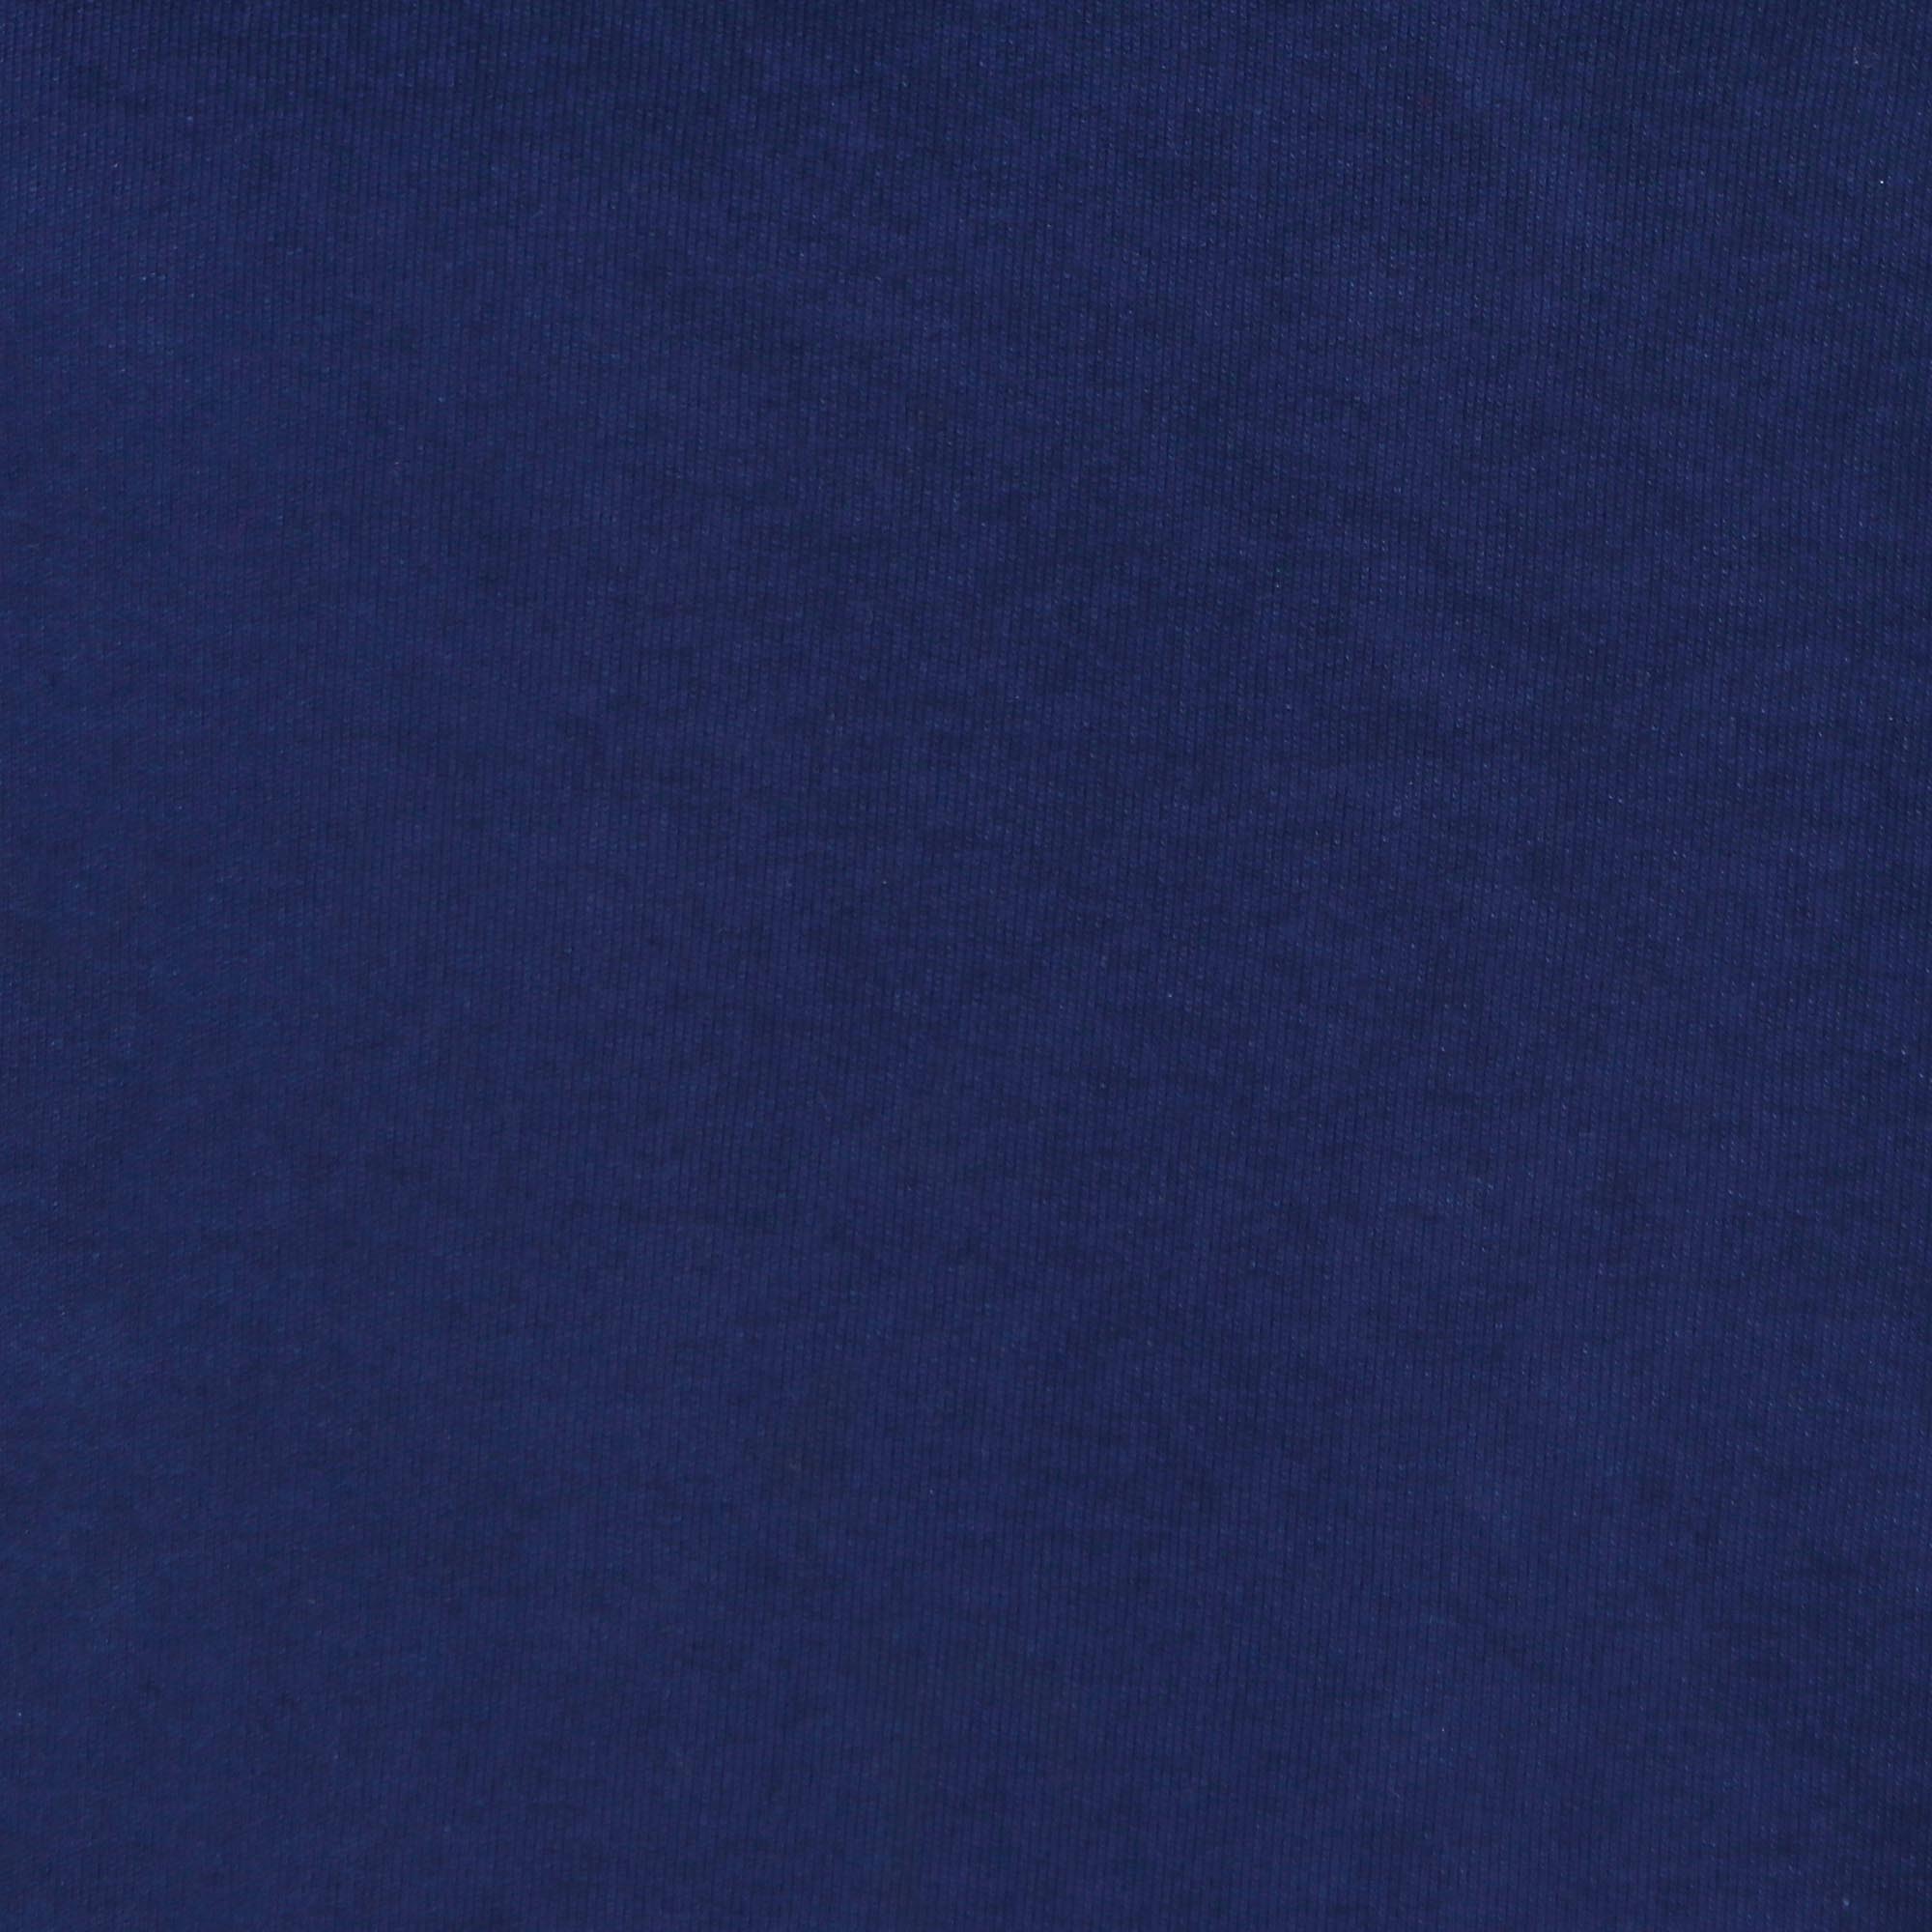 Мужская футболка-поло Diva Teks синяя (DTD-10), цвет синий, размер 46-48 - фото 6